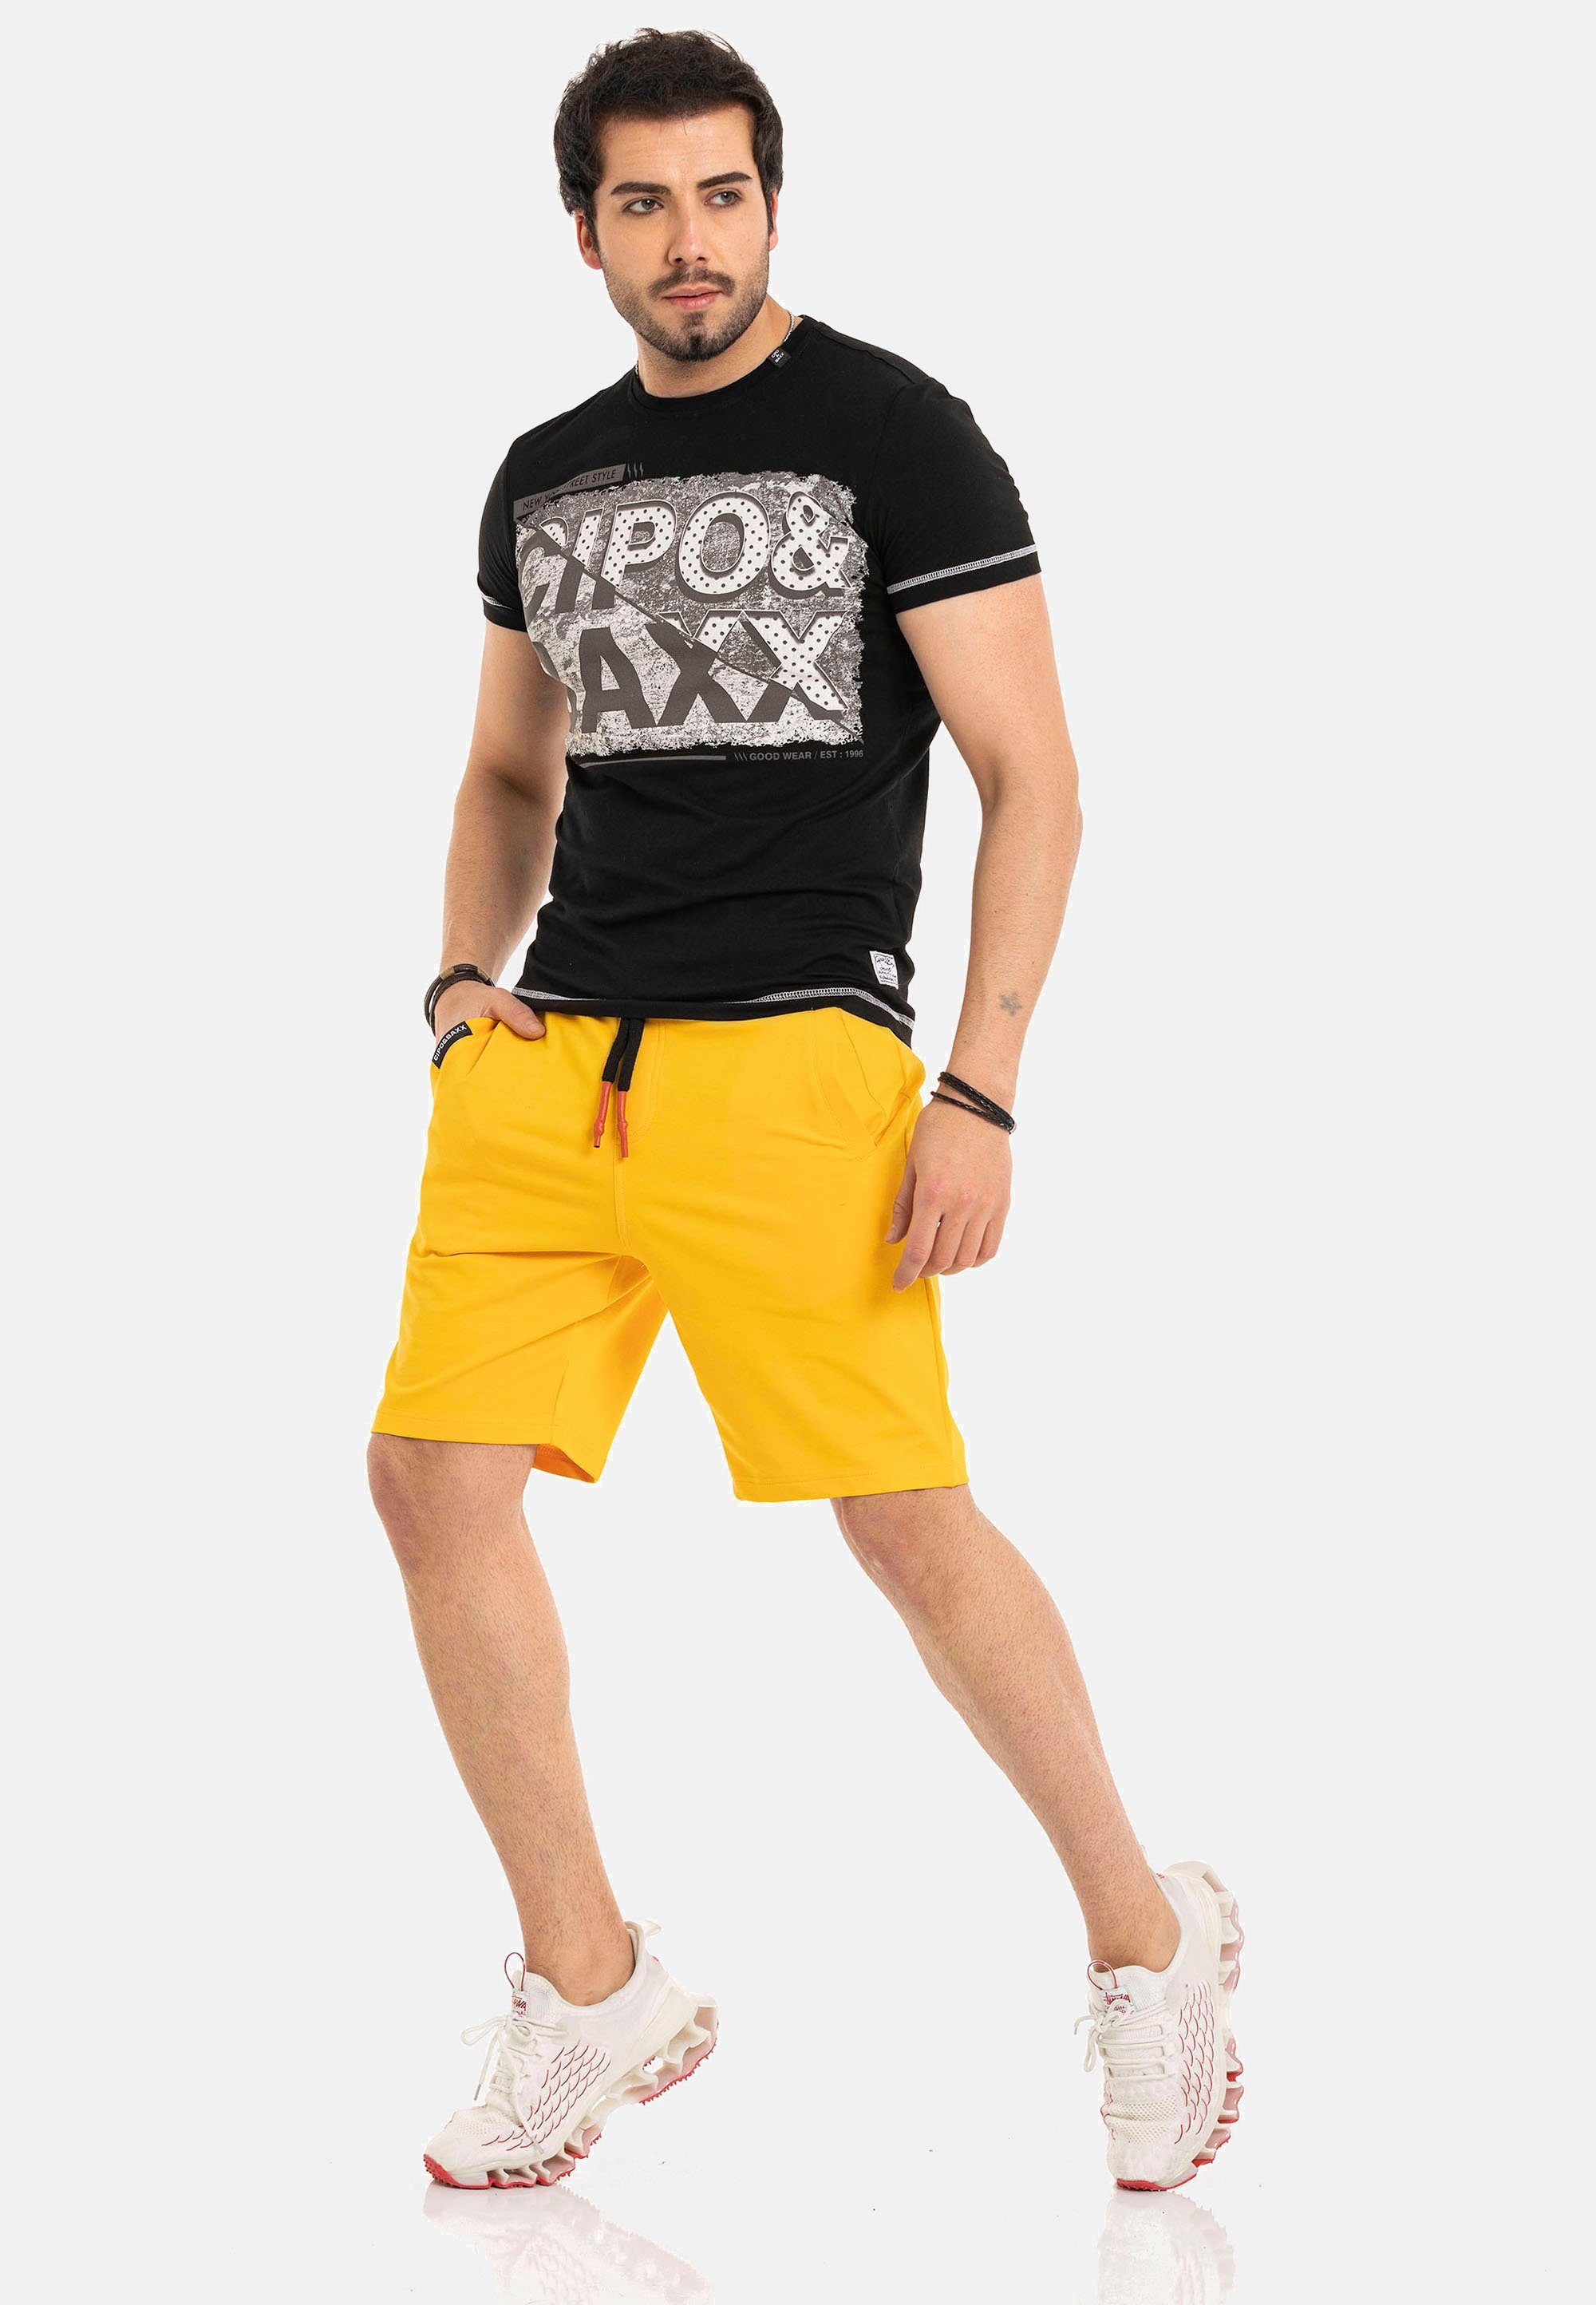 gelb sportlichem in Look Cipo Shorts & Baxx